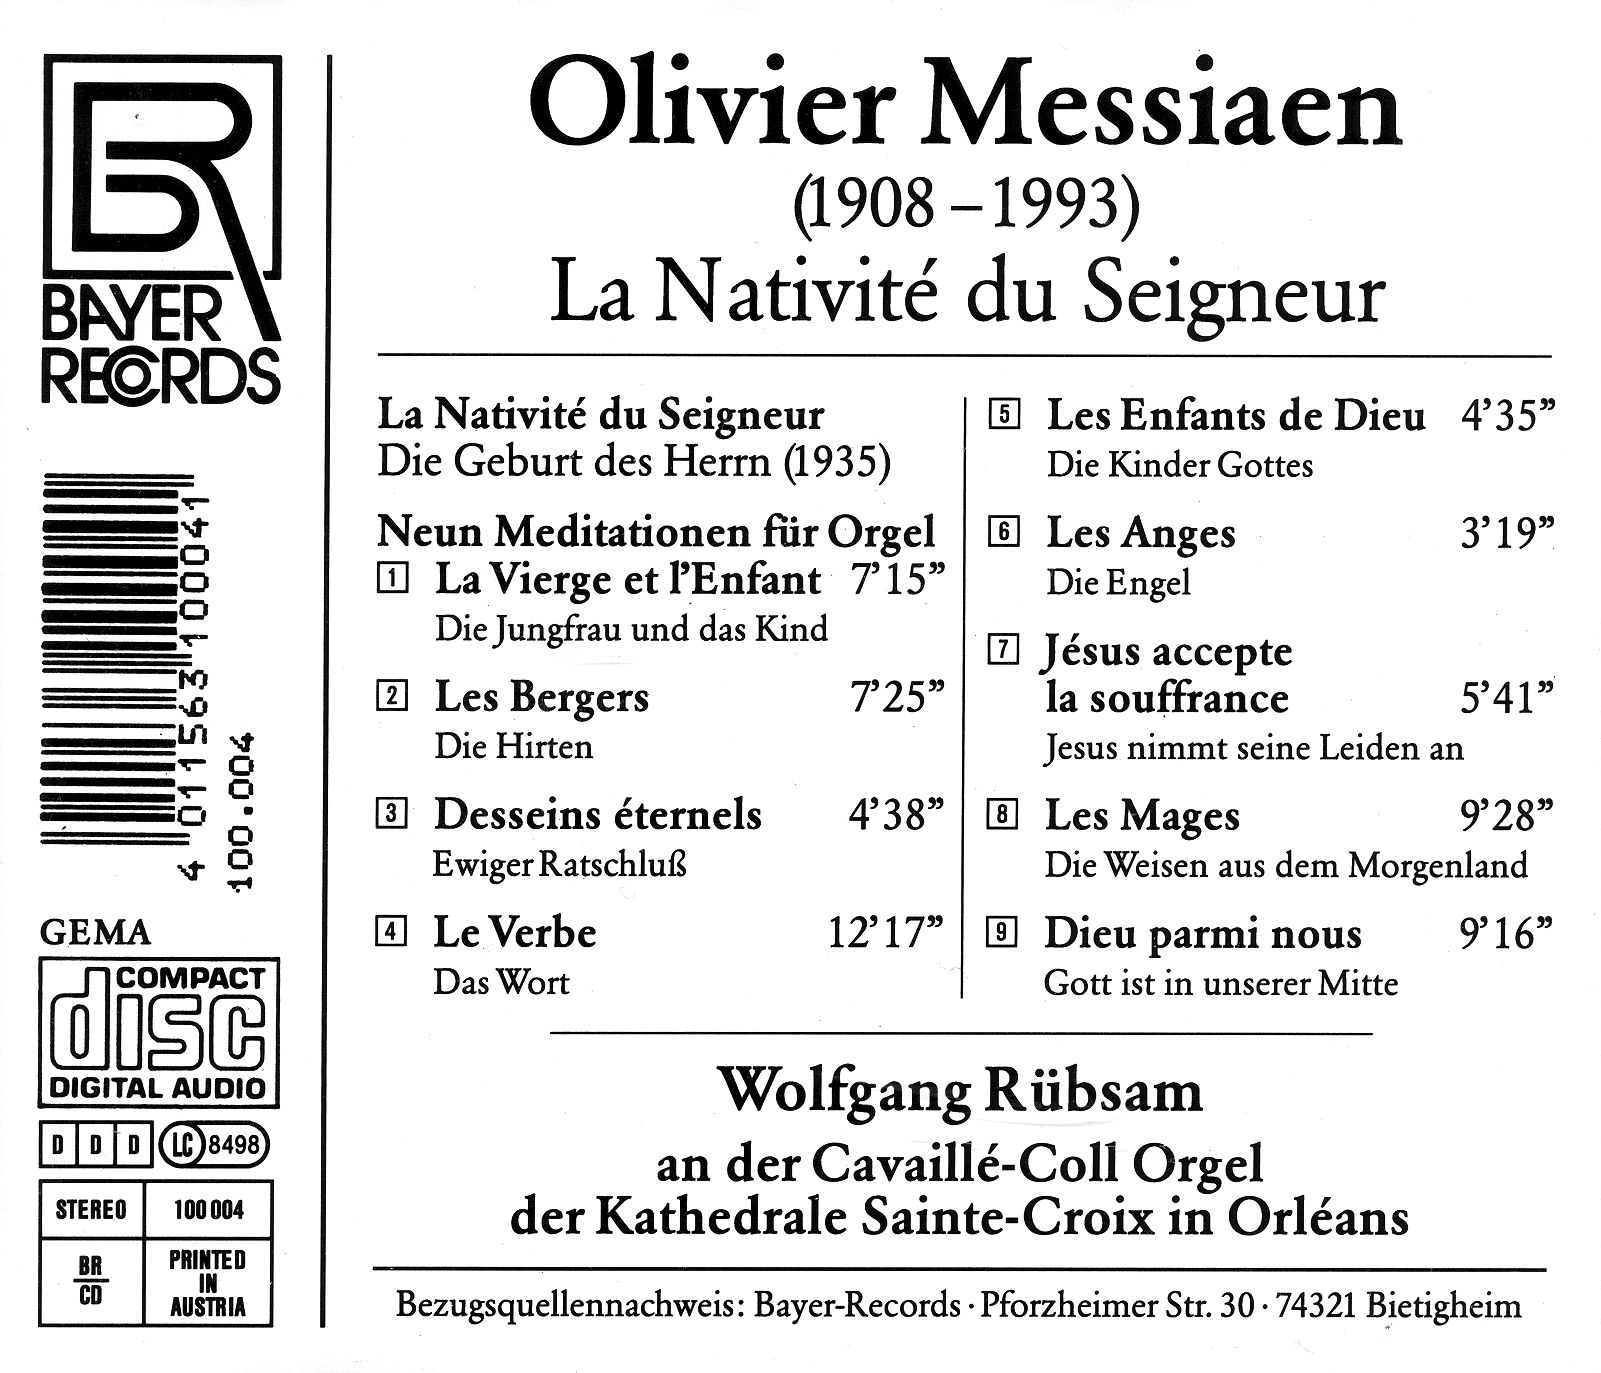 Olivier Messiaen - Nativité